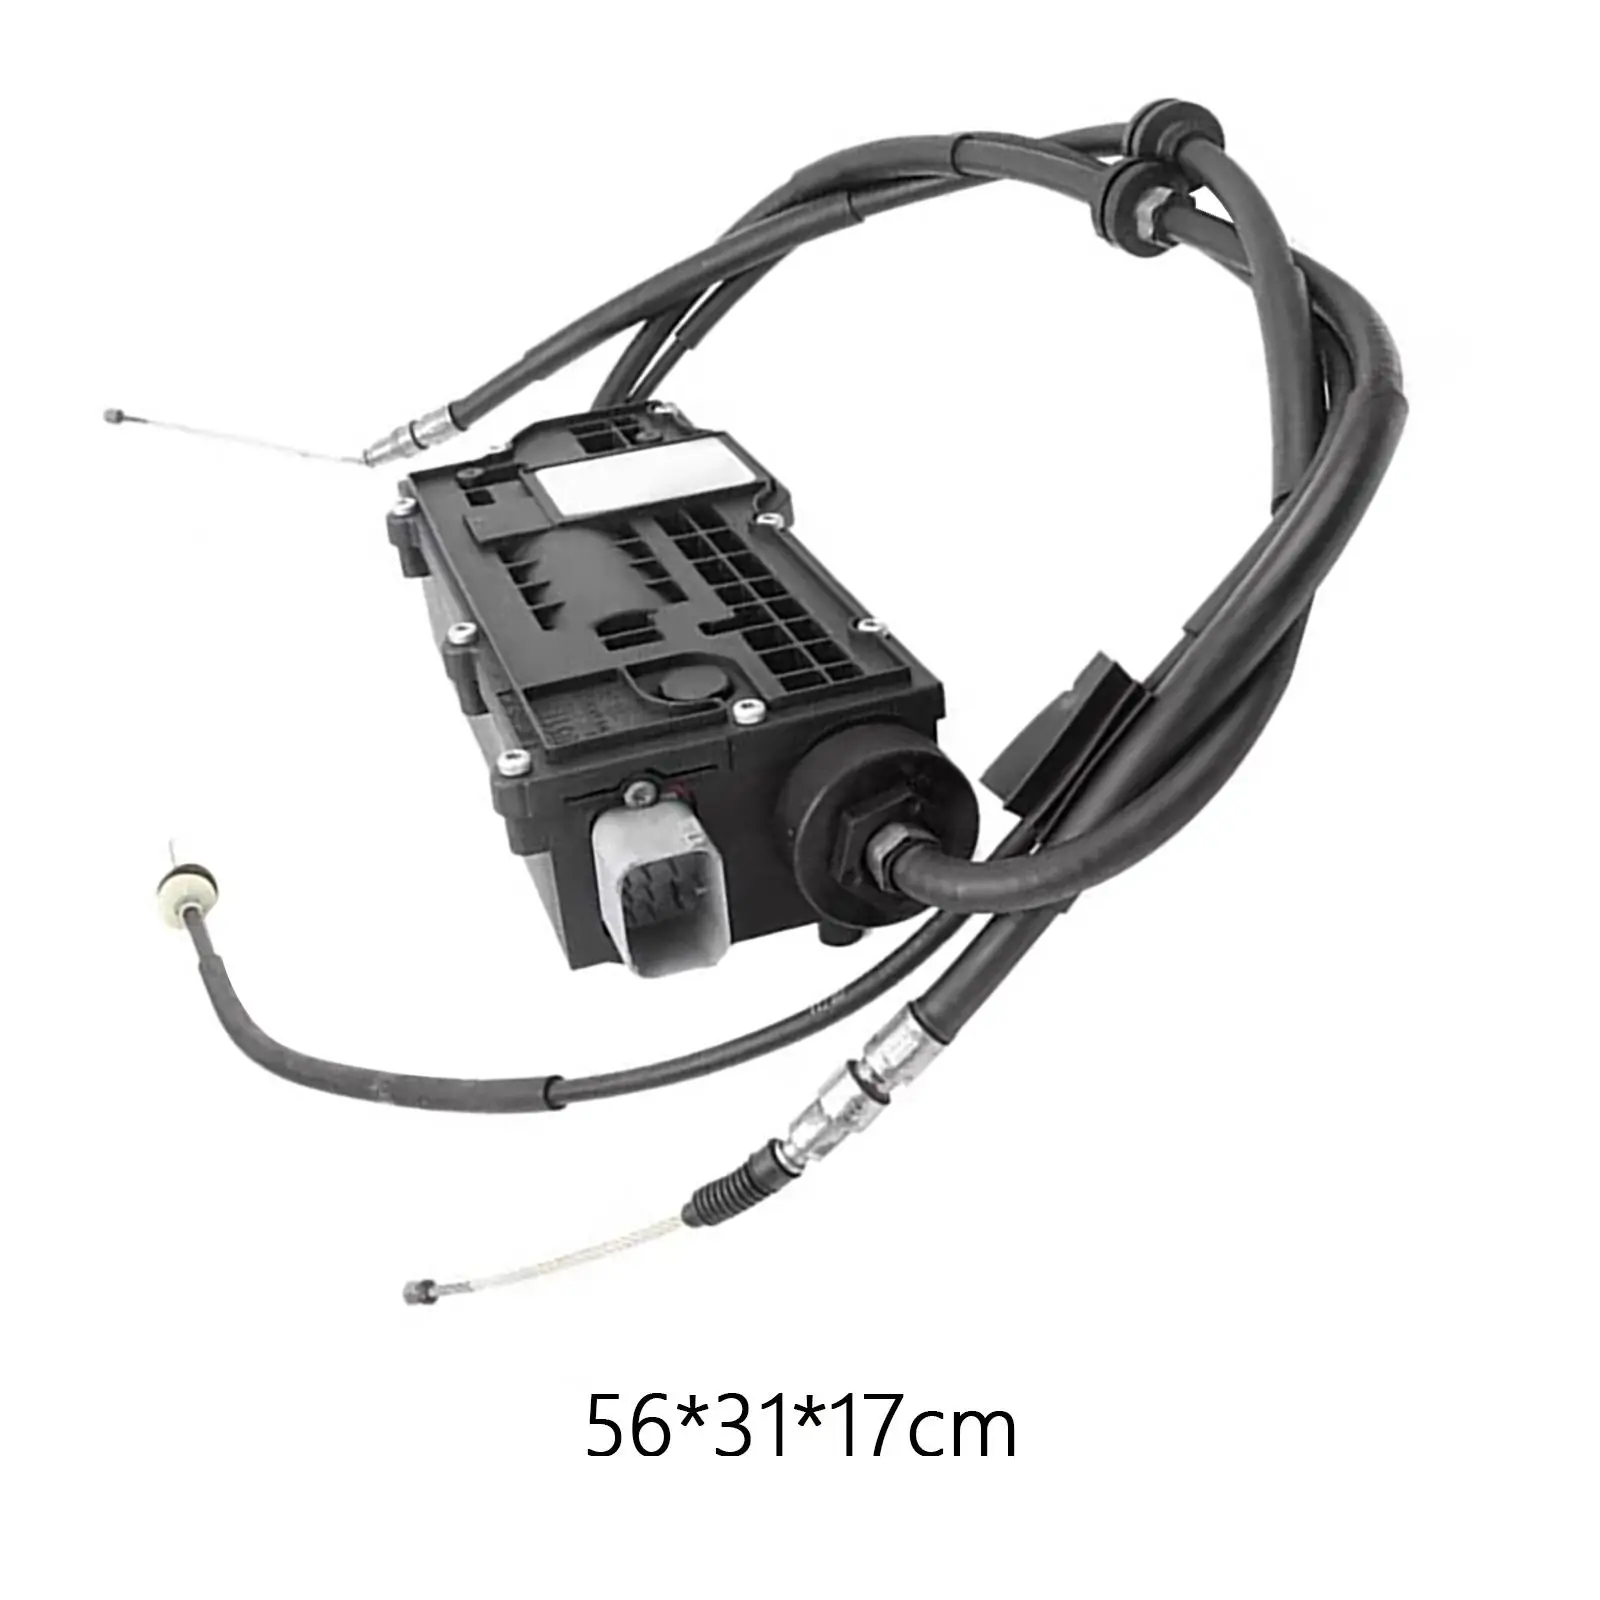 Parking Brake Actuator 34436850289 Direct Replaces Handbrake Actuator Module for BMW x5 x6 Easy Installation Professional